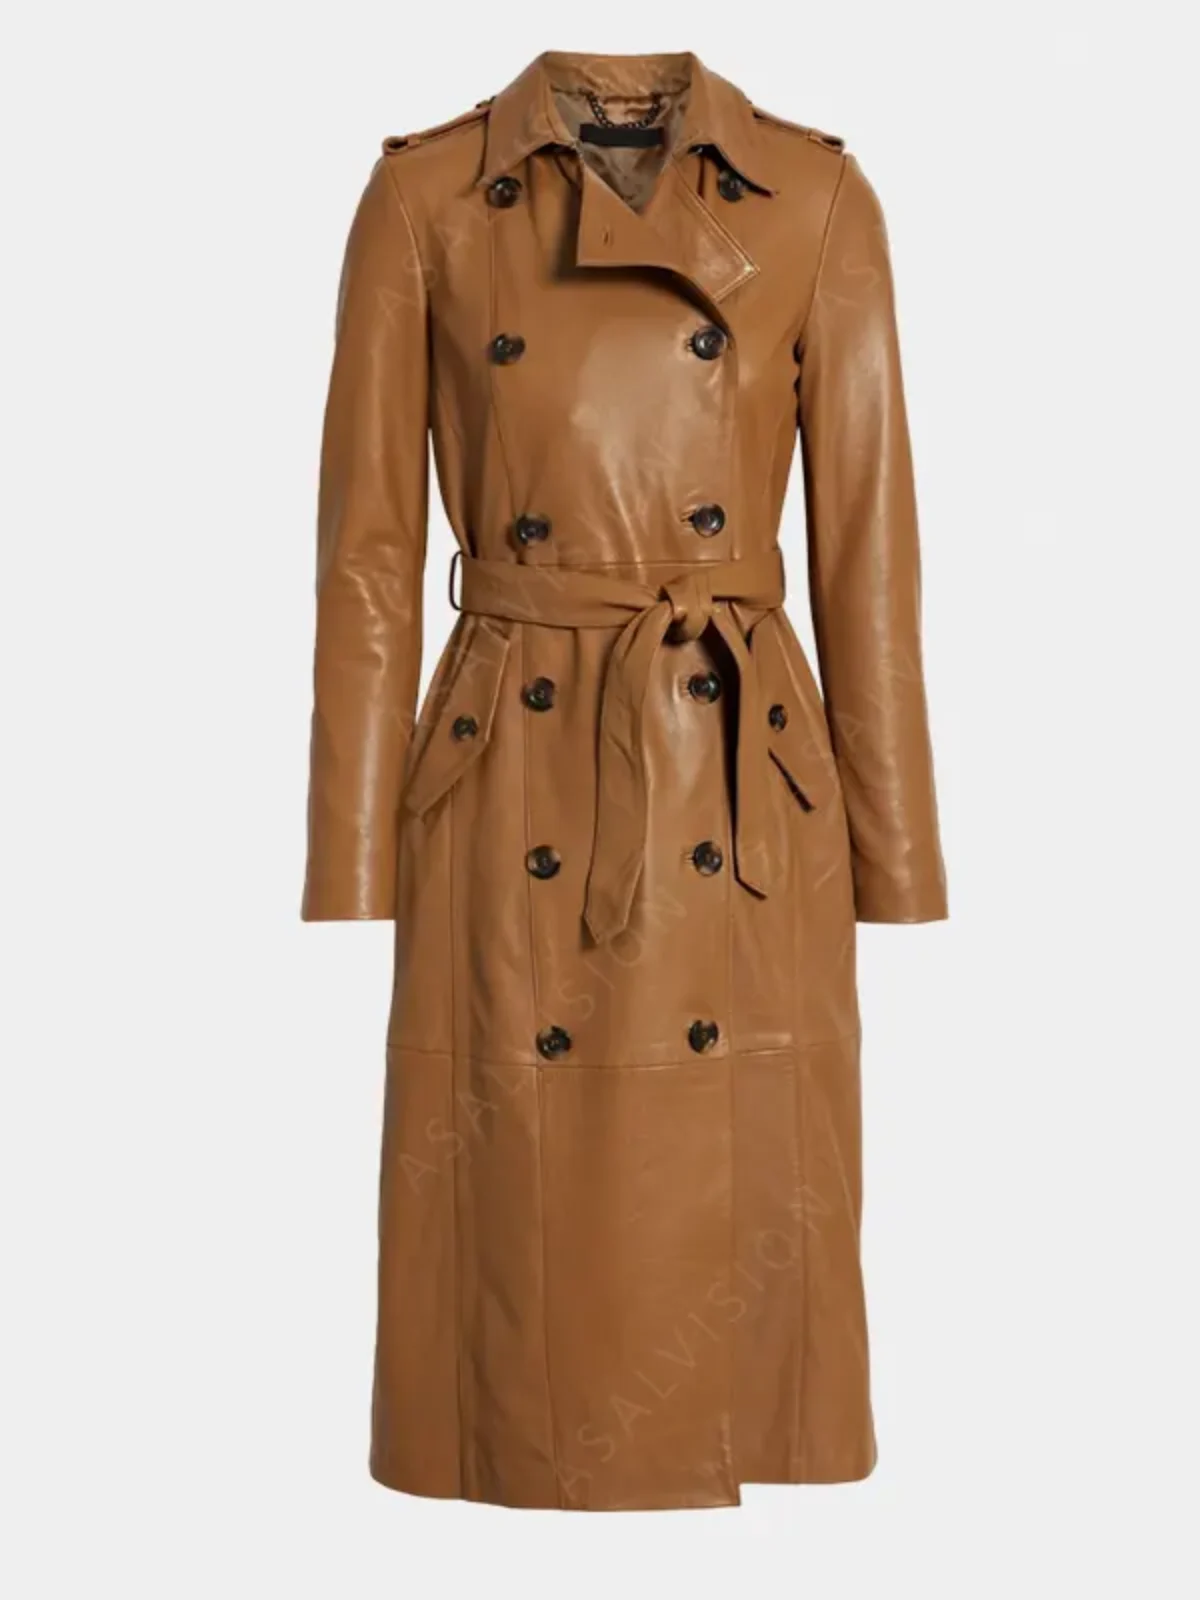 Heartstopper Elle Argent Brown Fur Coat